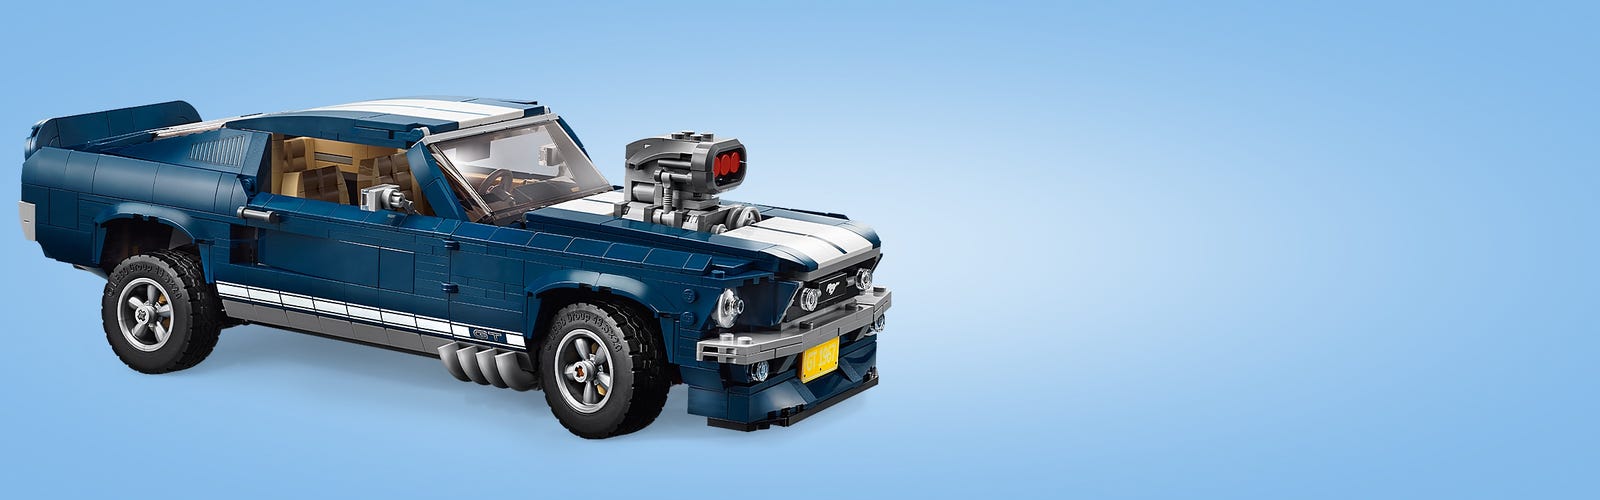 LEGO Creator 10265 Ford Mustang GT, Lego – ApoZona